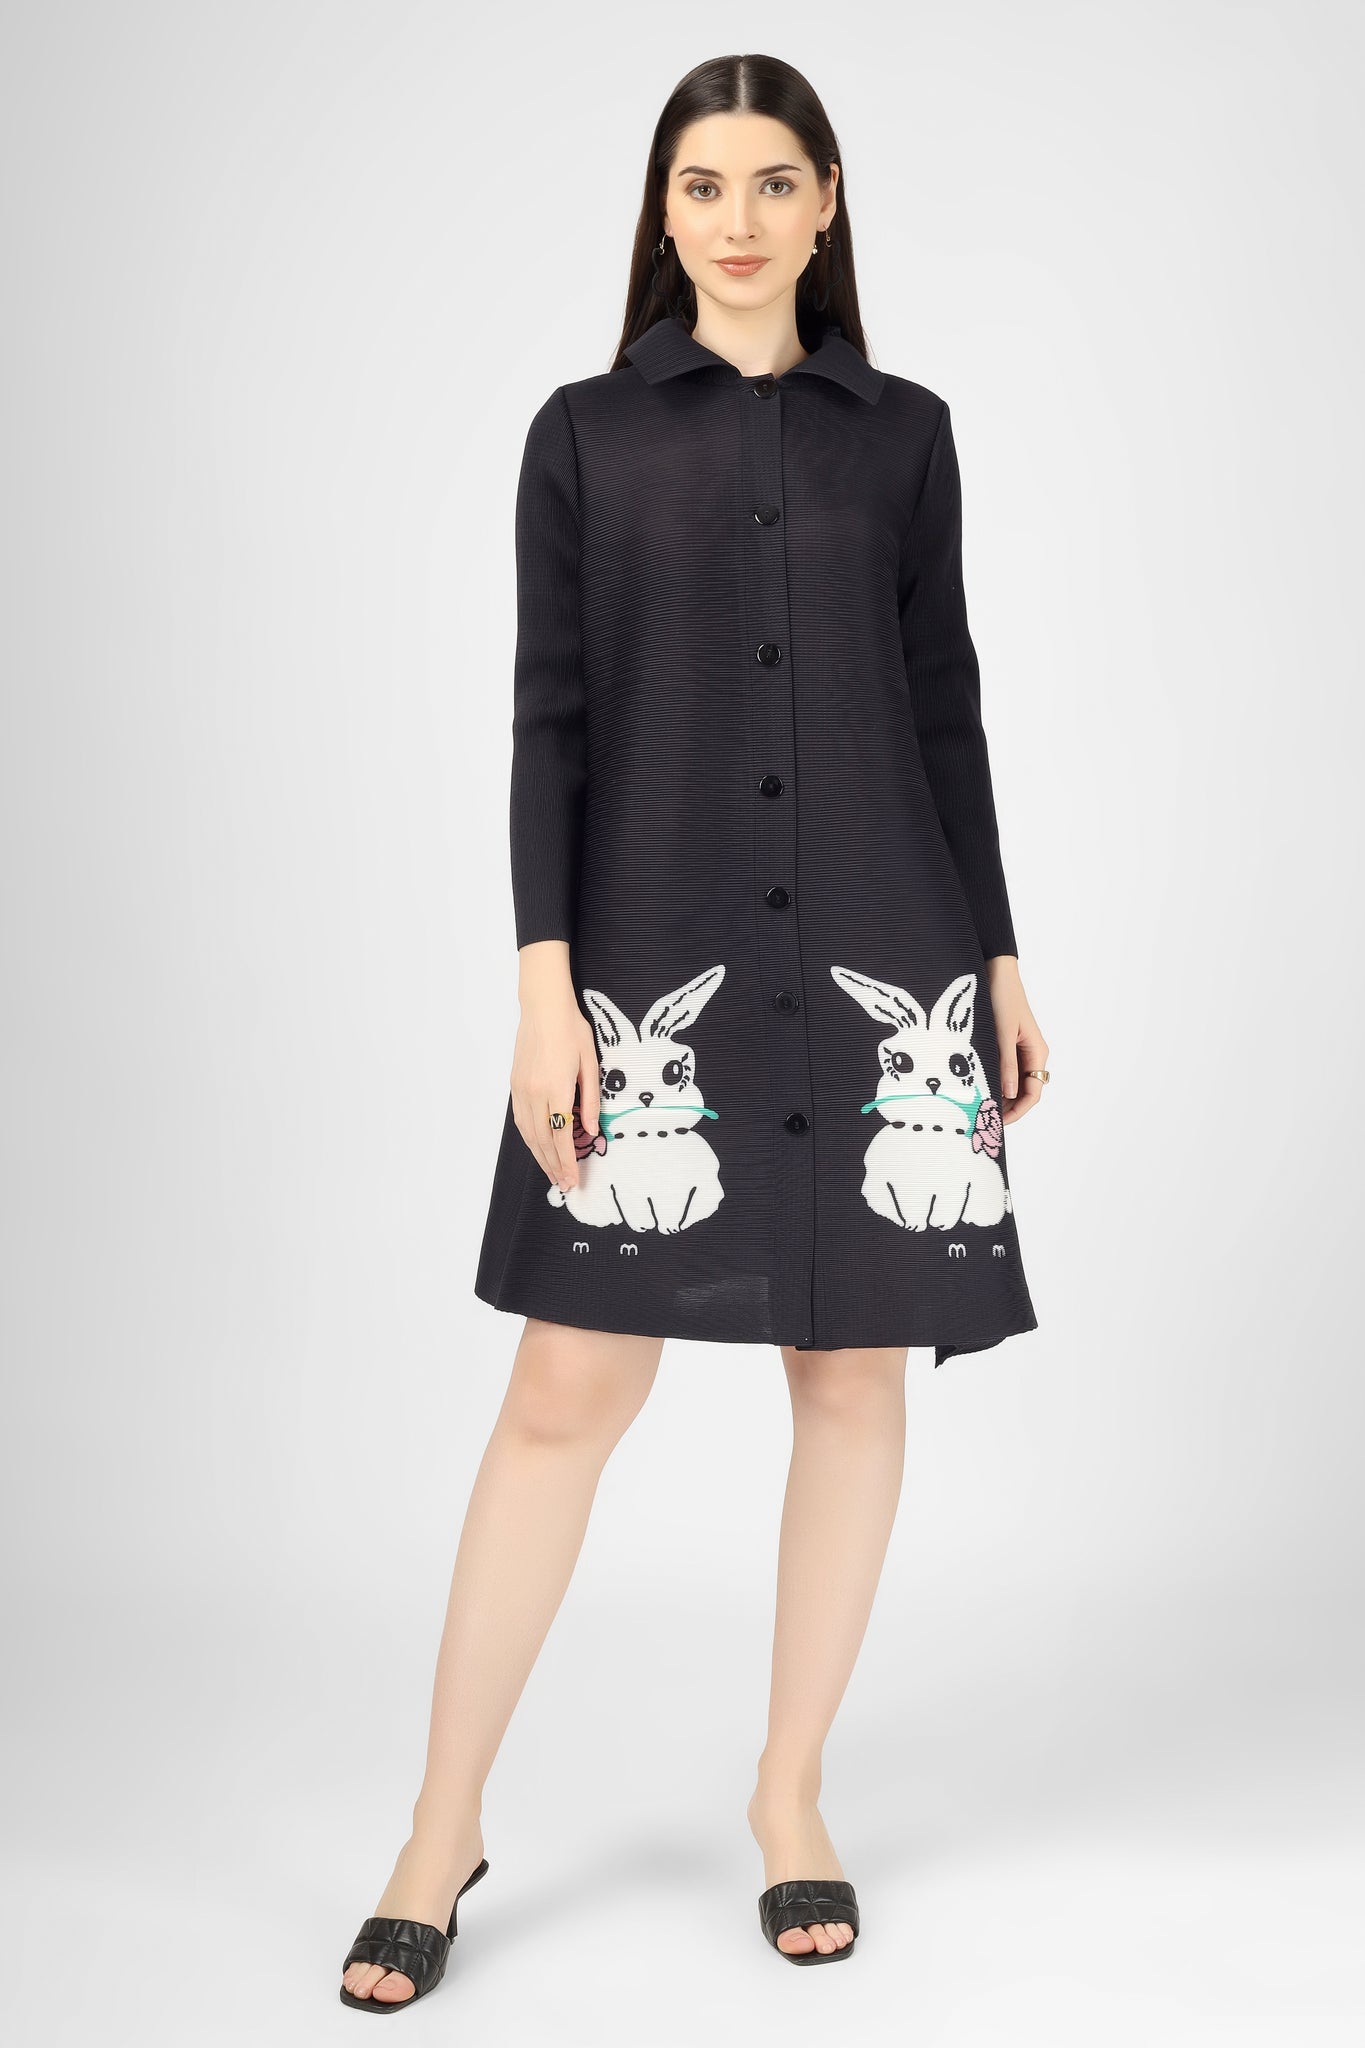 Black rabbit dress